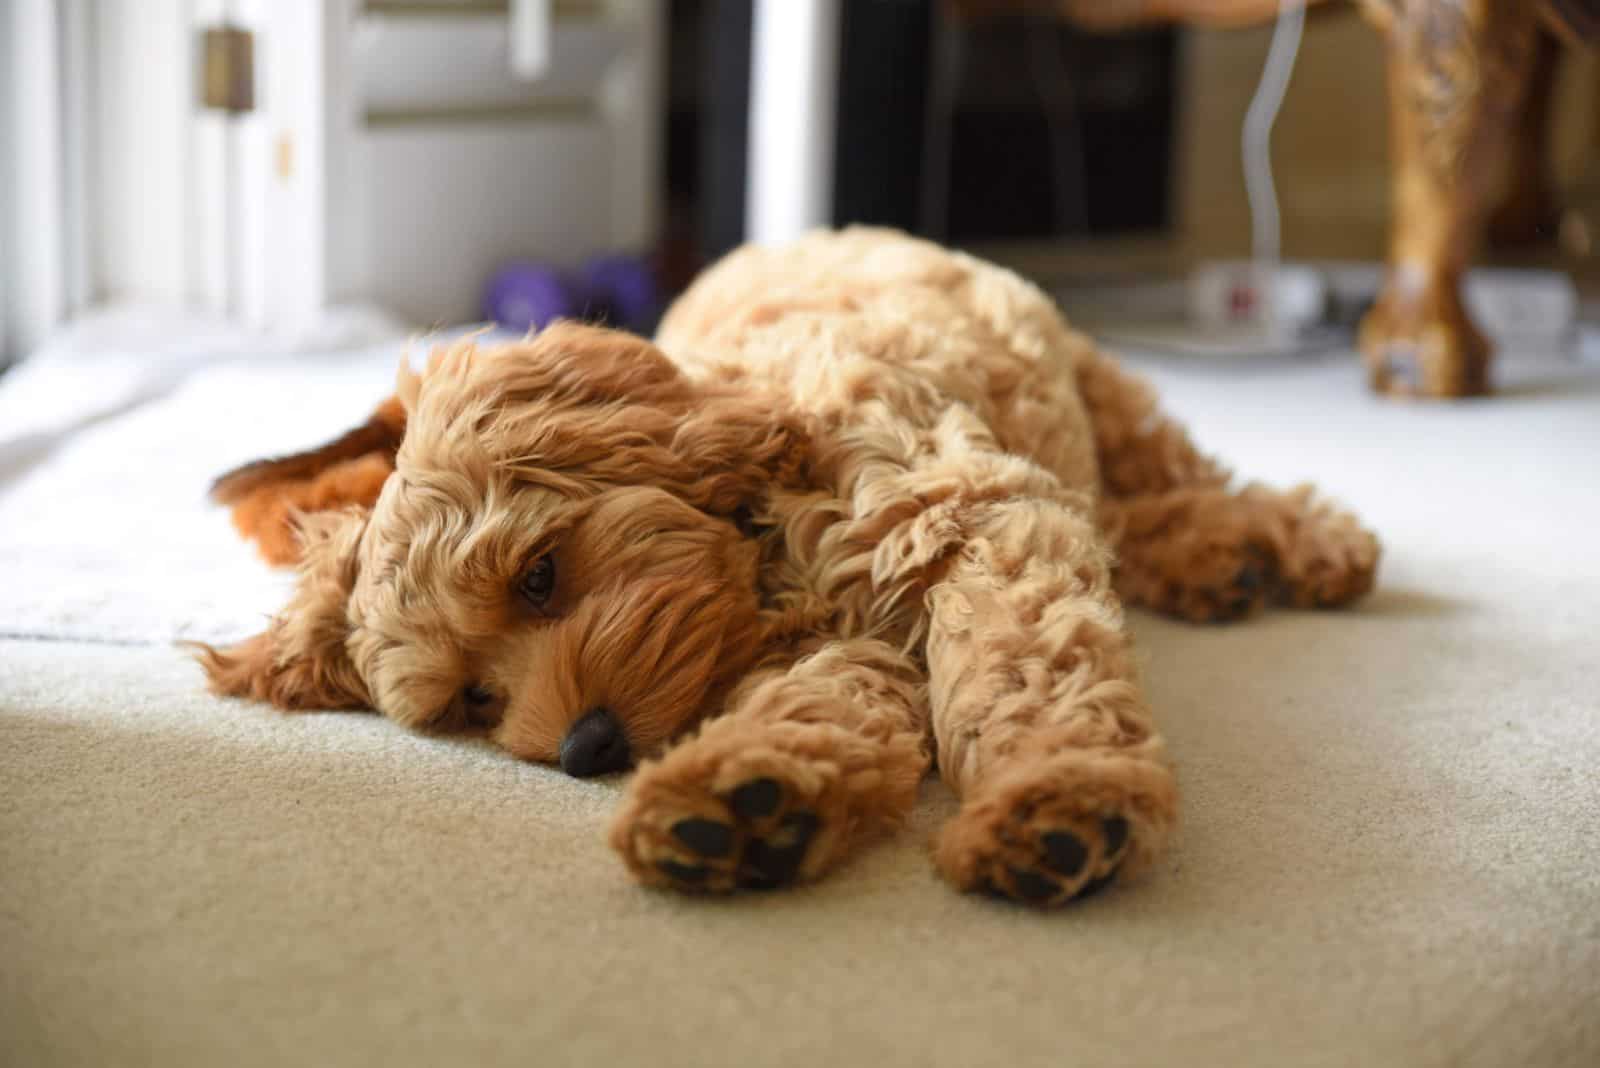 the dog cuddles on the carpet